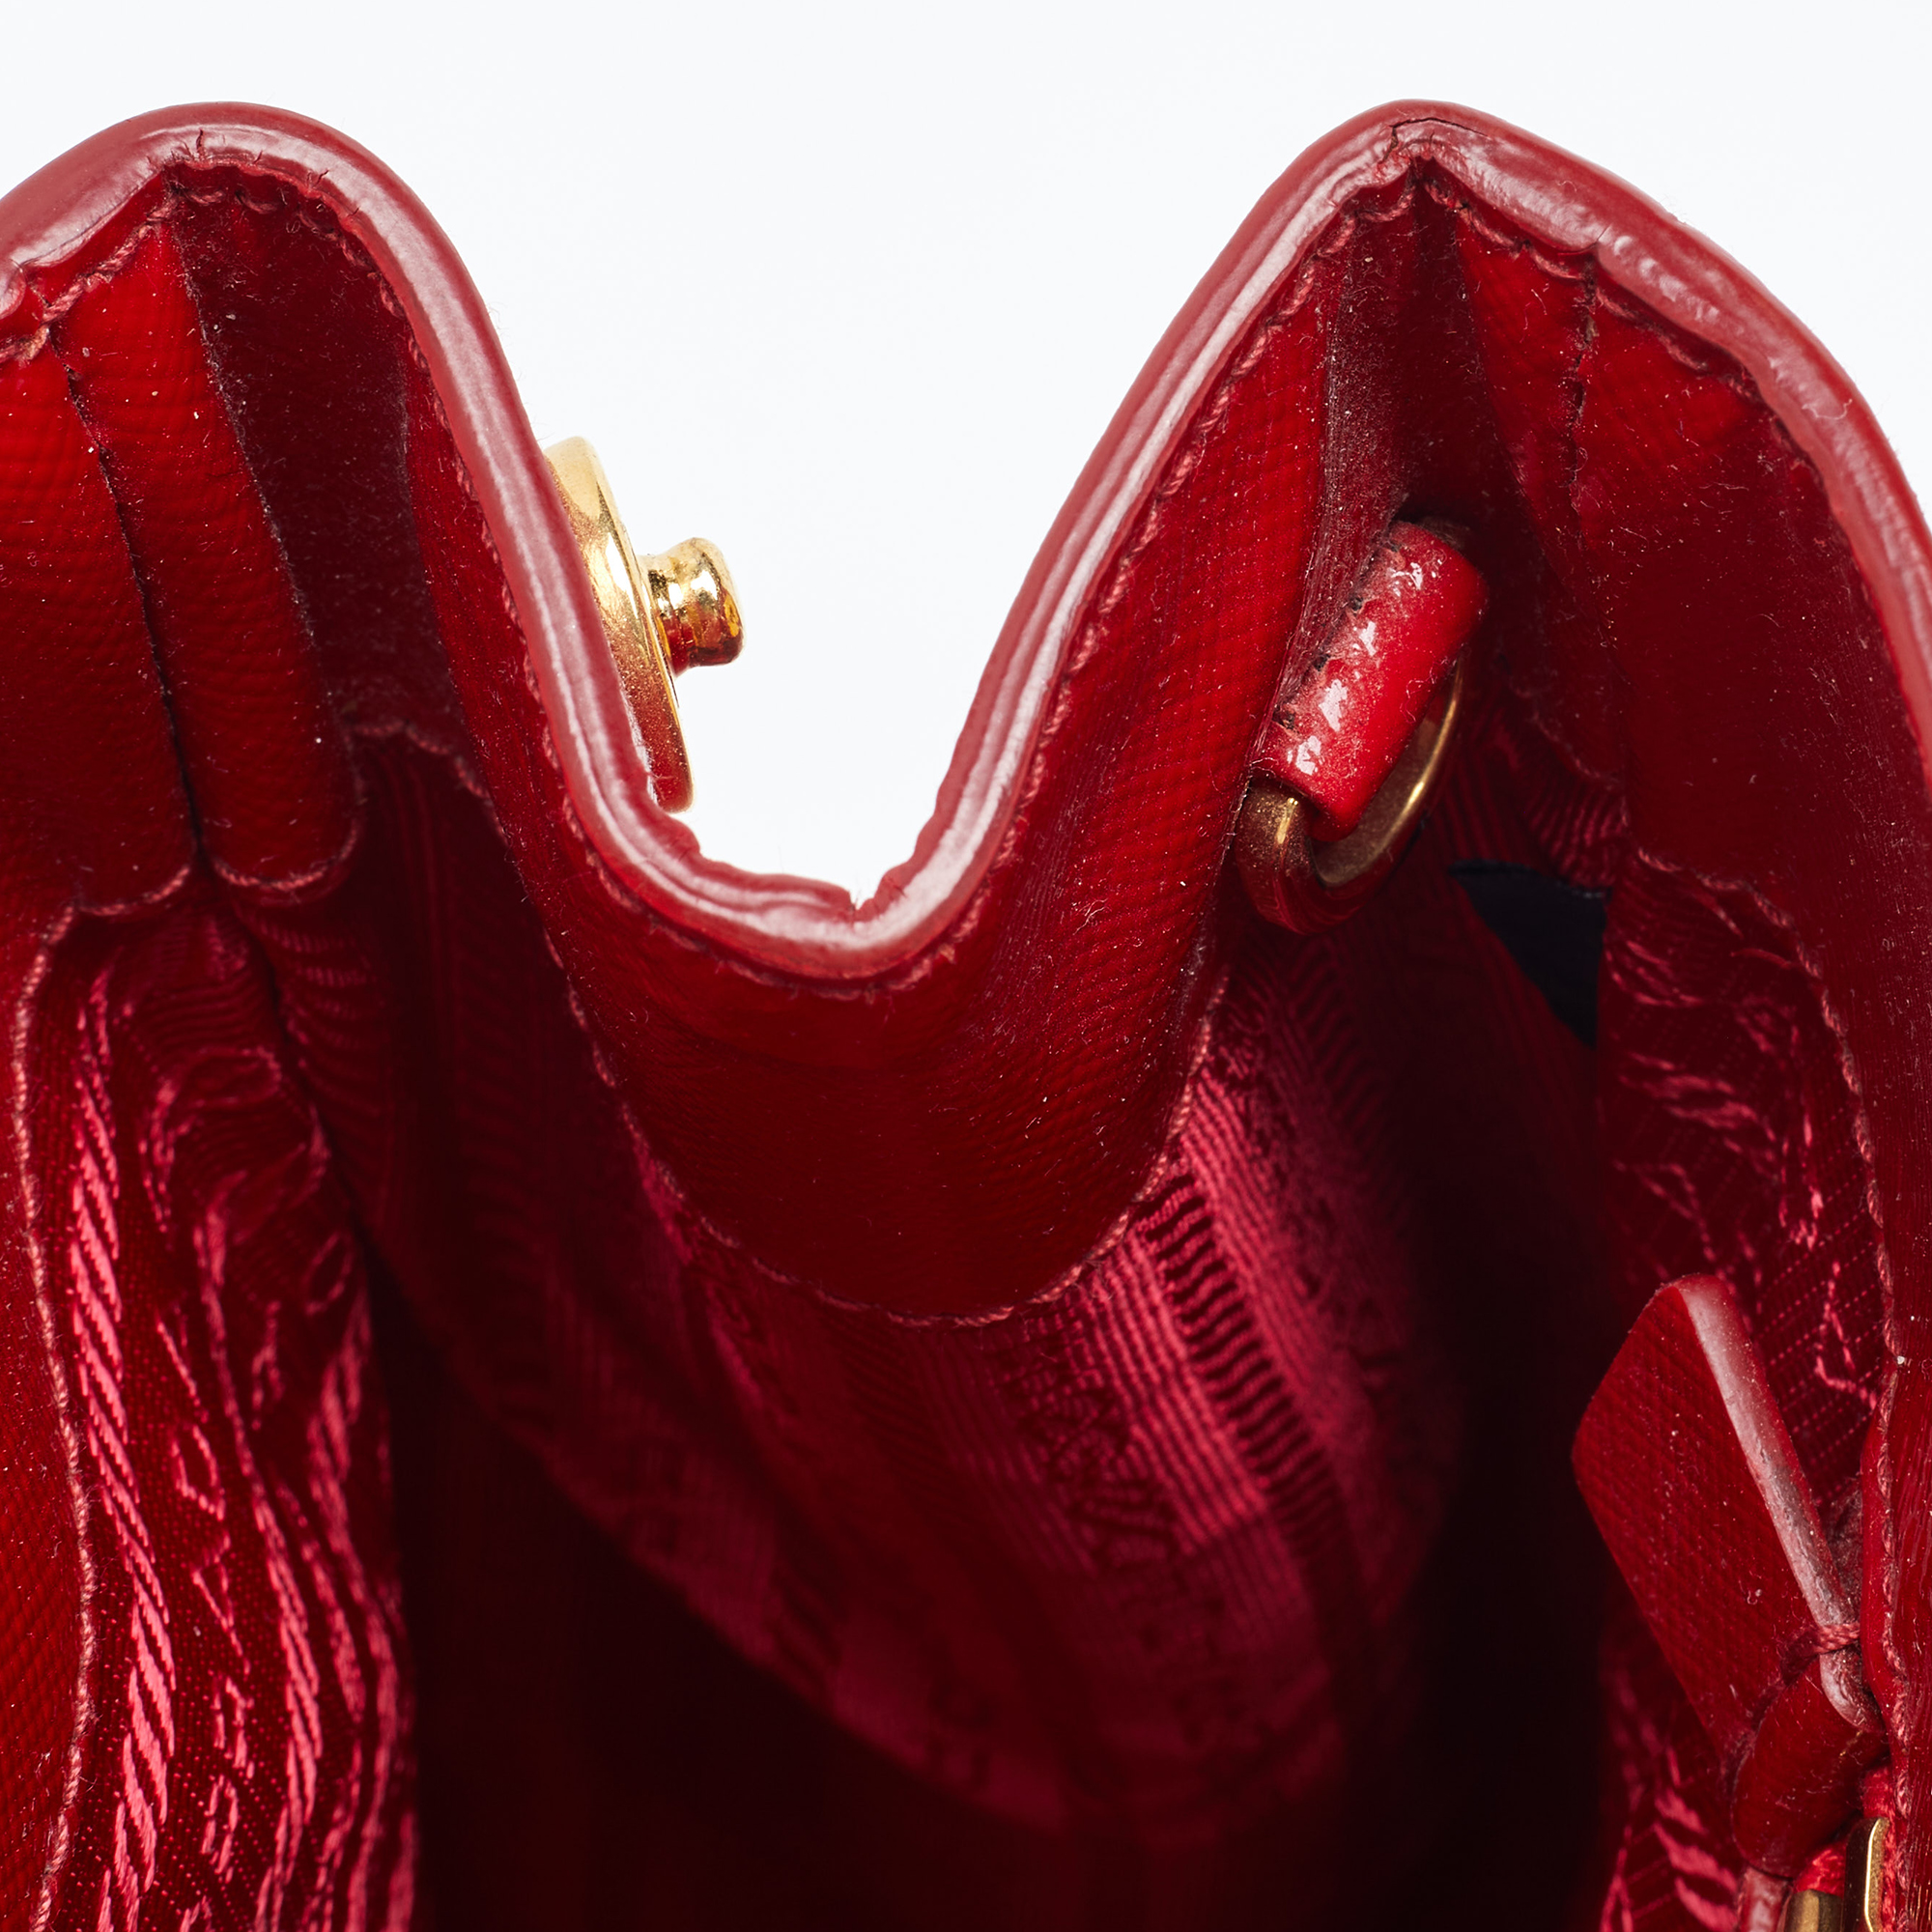 Prada Red Saffiano Patent Leather Double Handle Open Tote